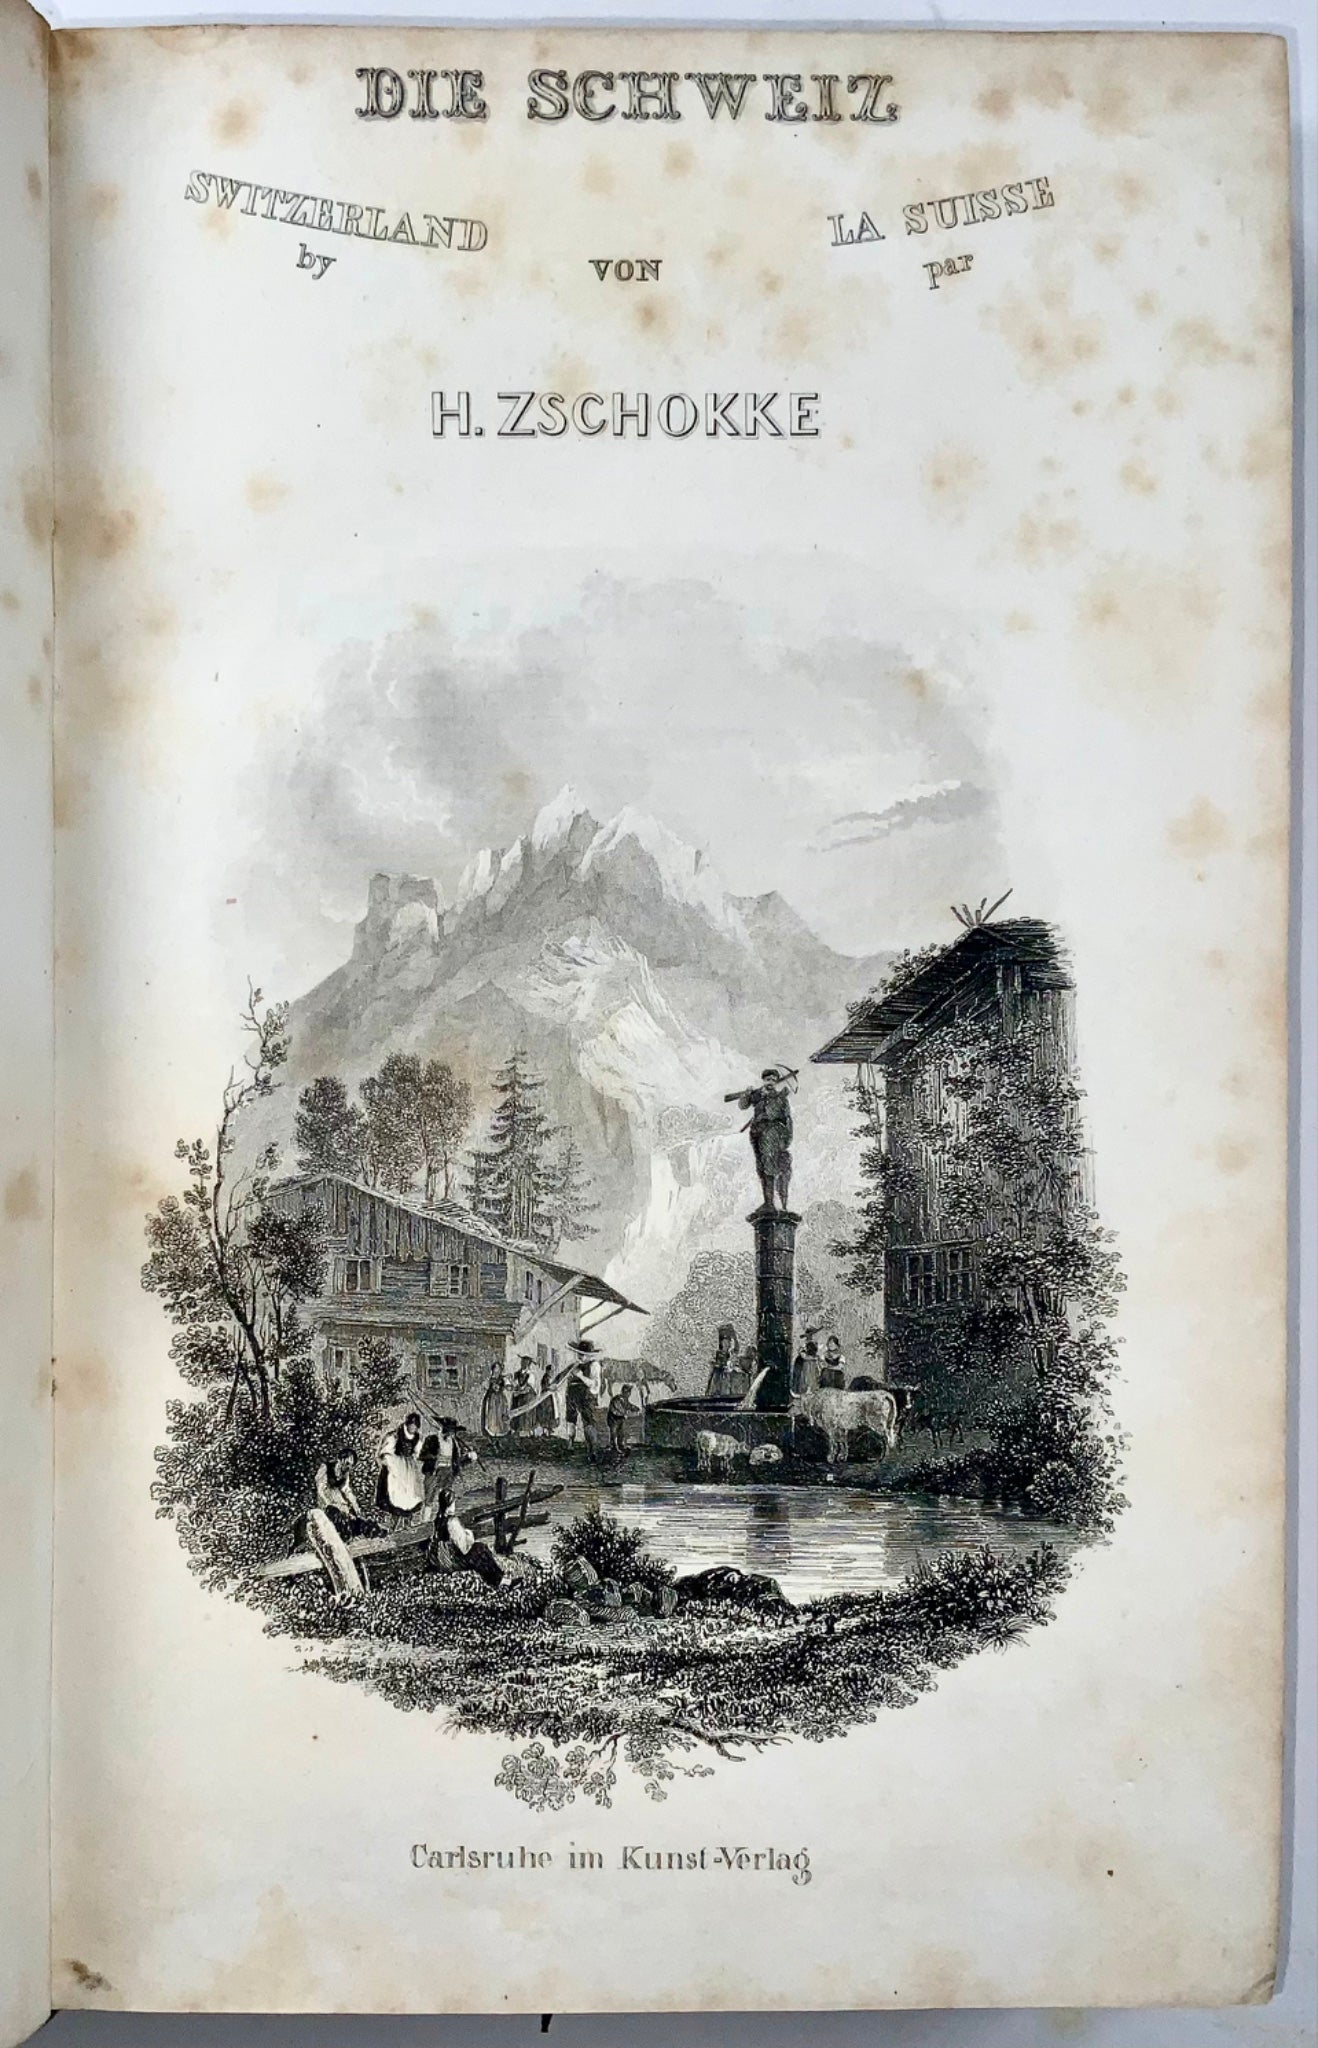 1836-8 H. Zschokke, Svizzera in 85 incisioni su acciaio, 4to, 2 voll